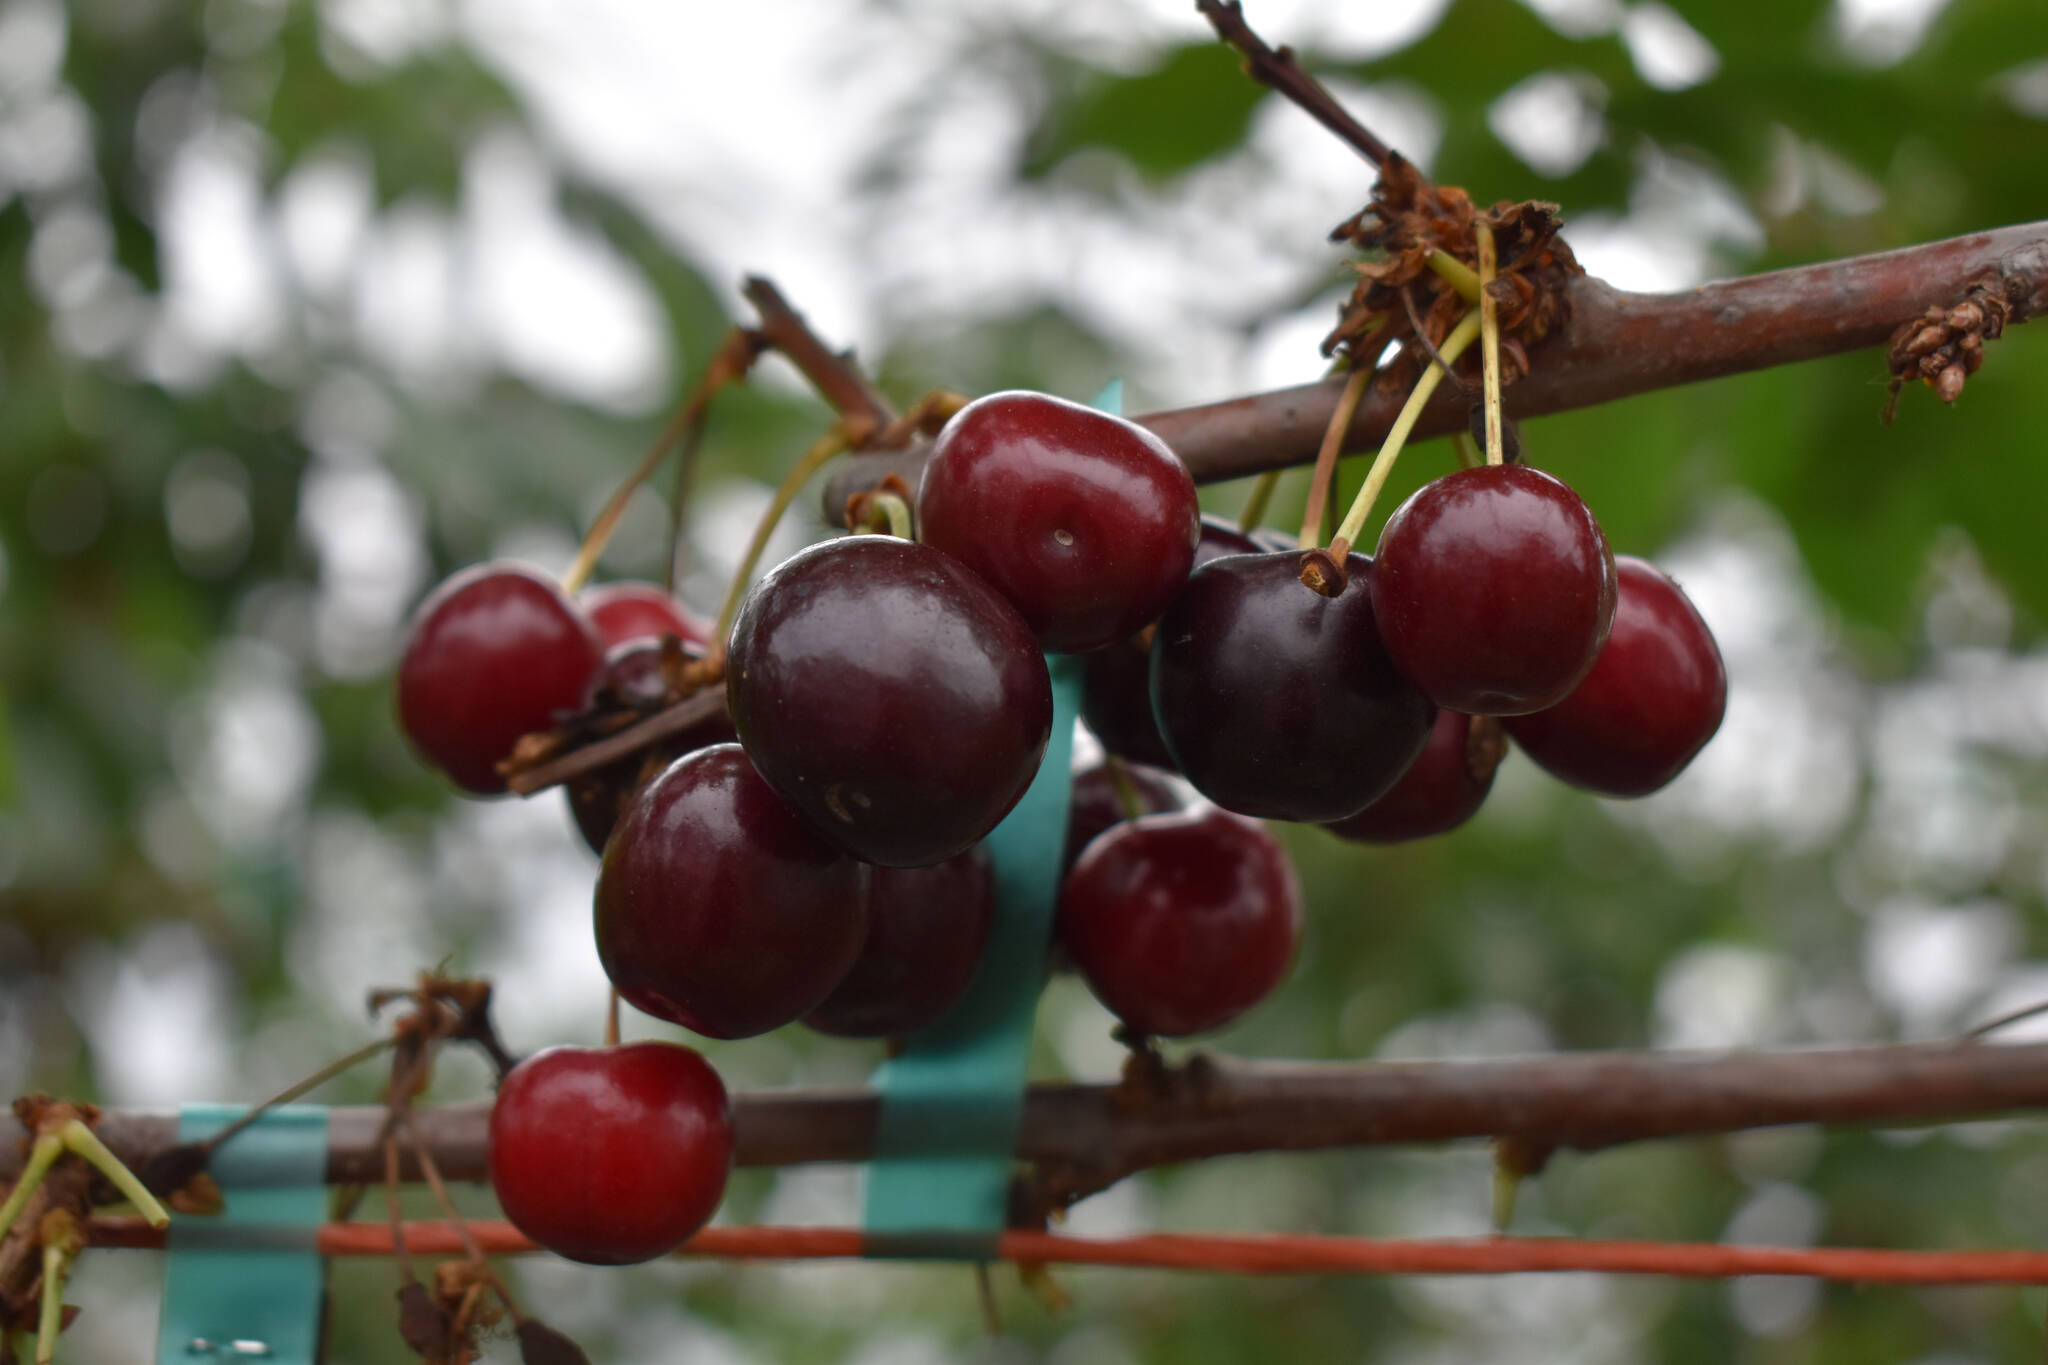 Cherries are ready to be picked at O’Brien Garden & Trees on Wednesday, Aug. 31, 2022, in Nikiski, Alaska. (Jake Dye/Peninsula Clarion)